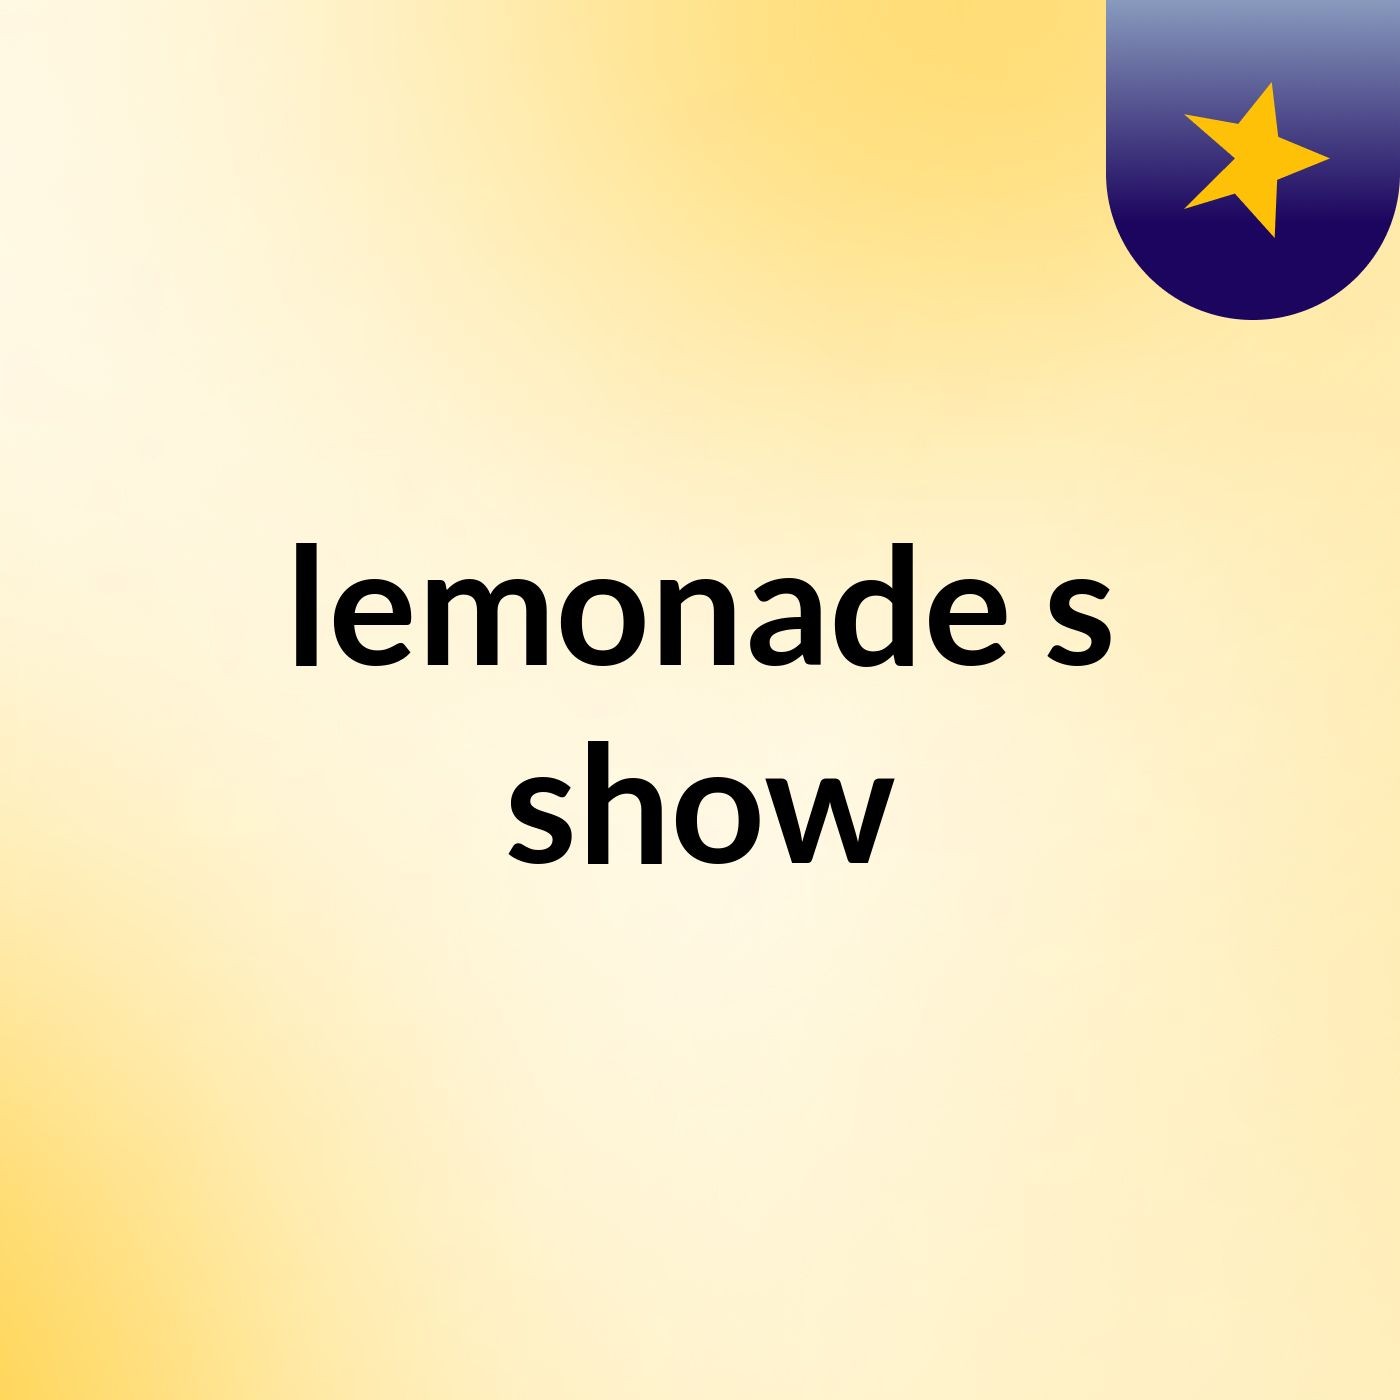 lemonade's show